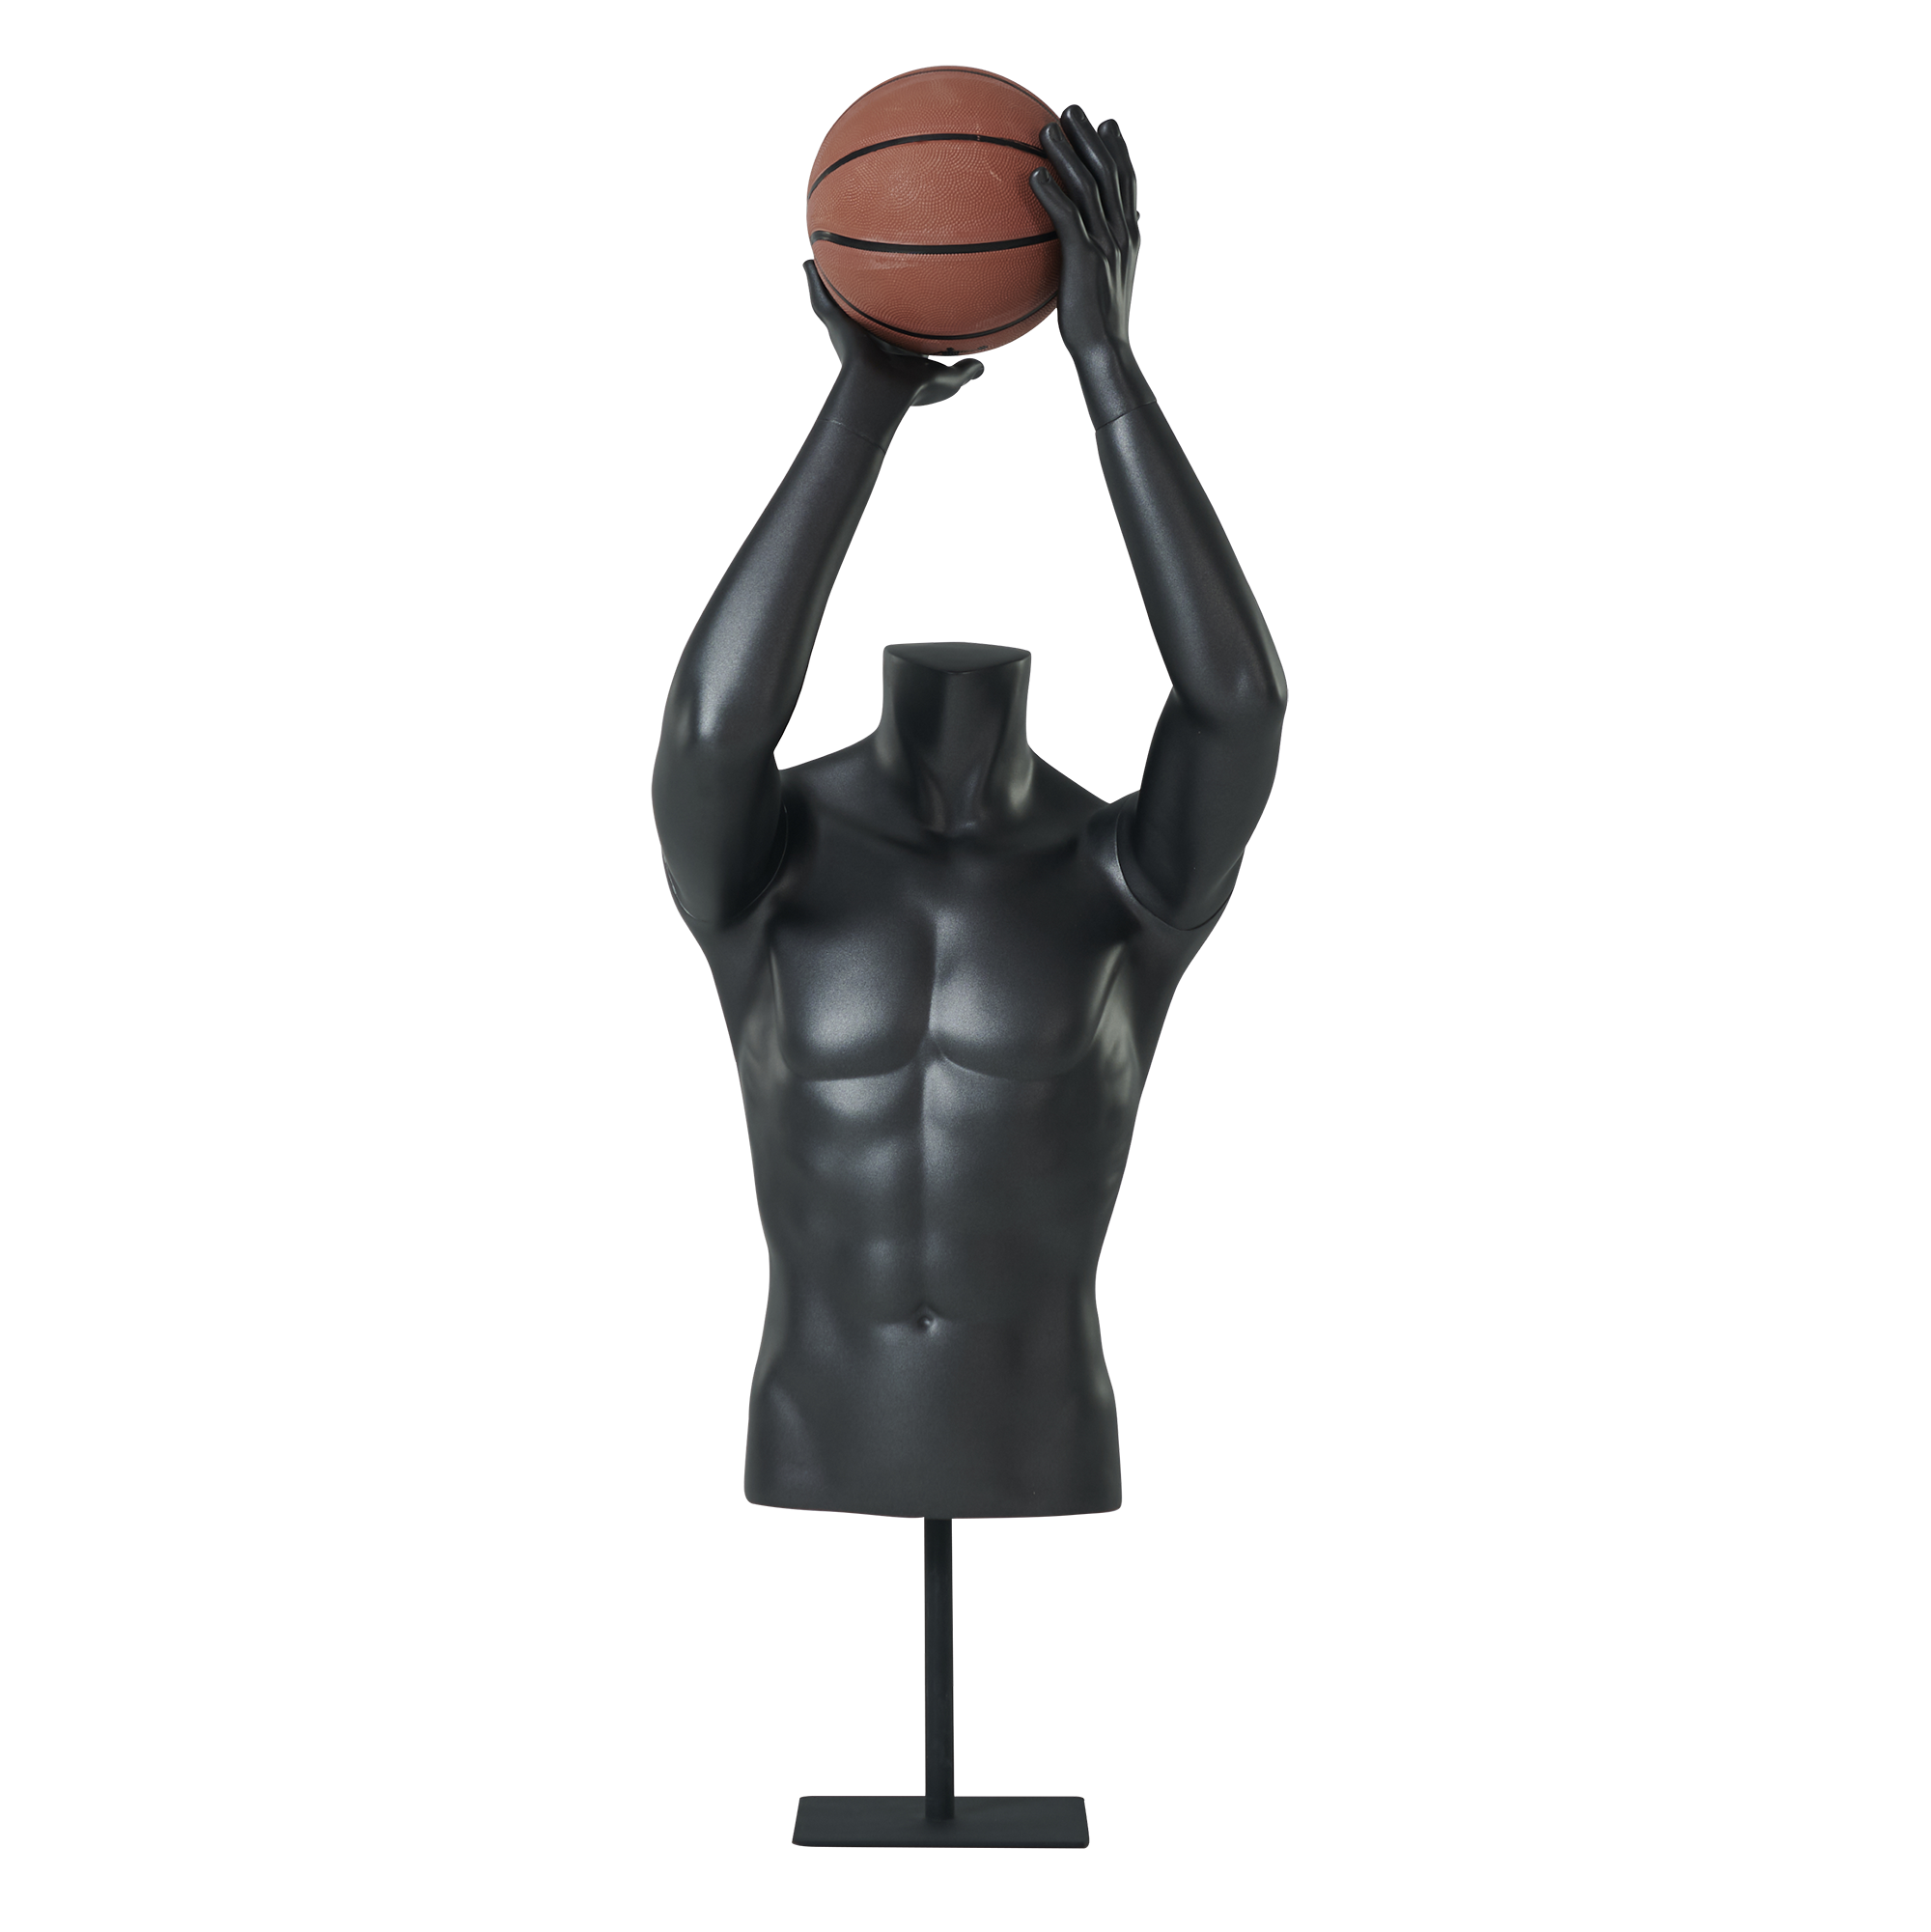 Acheter Mannequin de basket-ball masculin du haut du torse,Mannequin de basket-ball masculin du haut du torse Prix,Mannequin de basket-ball masculin du haut du torse Marques,Mannequin de basket-ball masculin du haut du torse Fabricant,Mannequin de basket-ball masculin du haut du torse Quotes,Mannequin de basket-ball masculin du haut du torse Société,